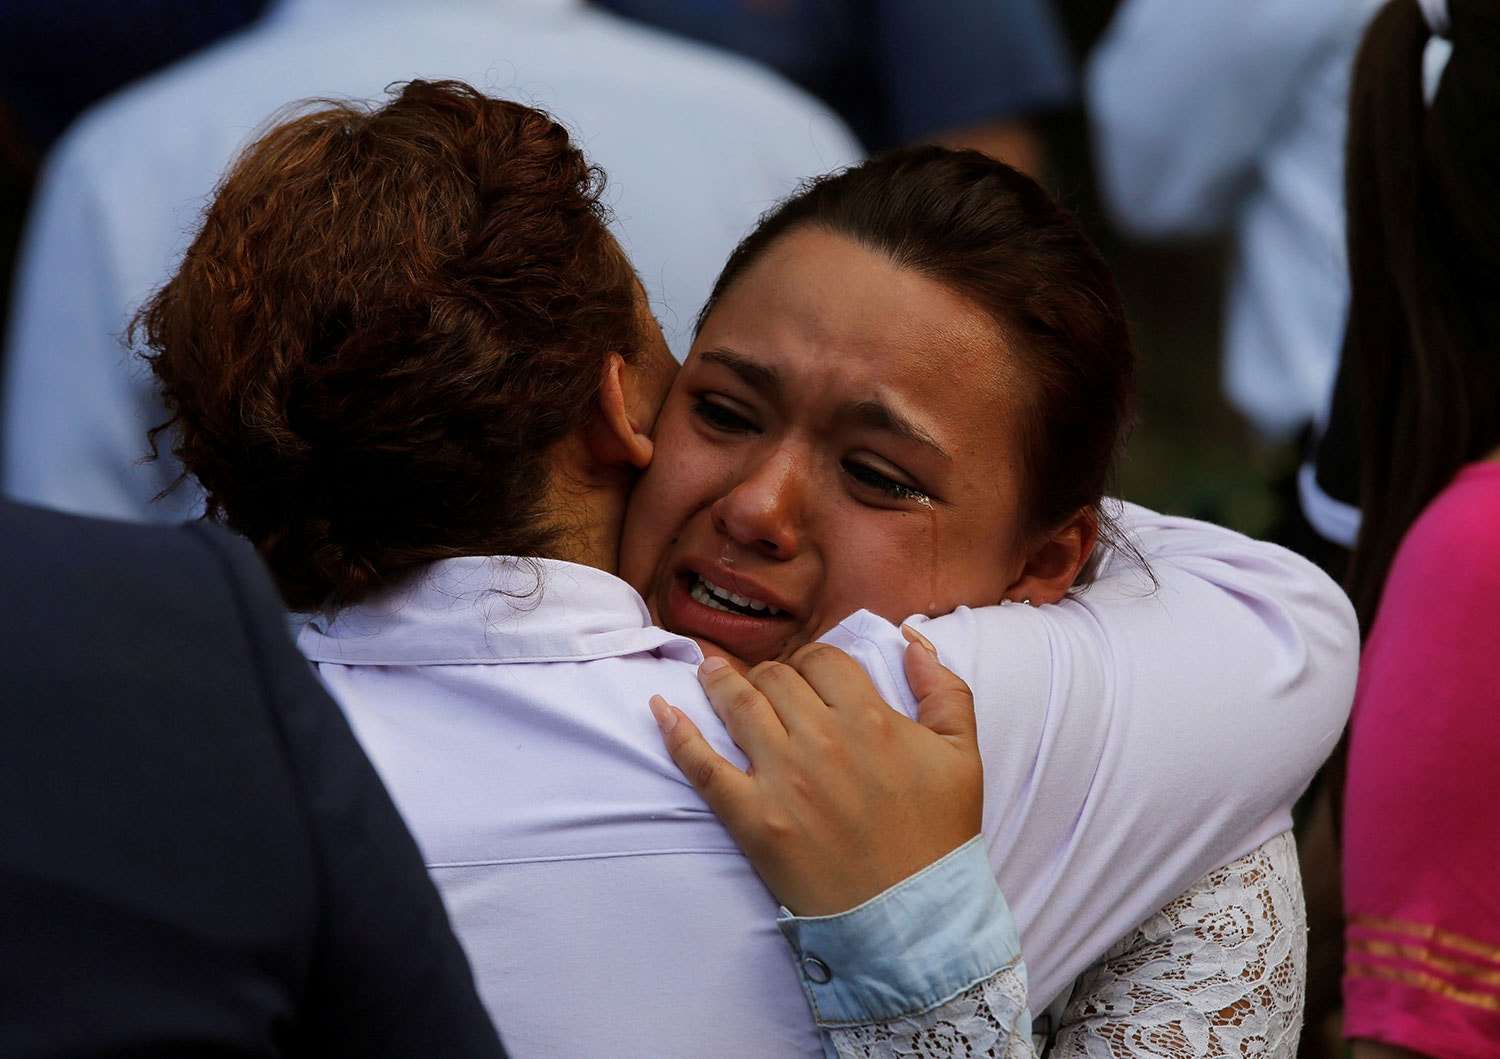  Foto: Henry Romero - Reuters 